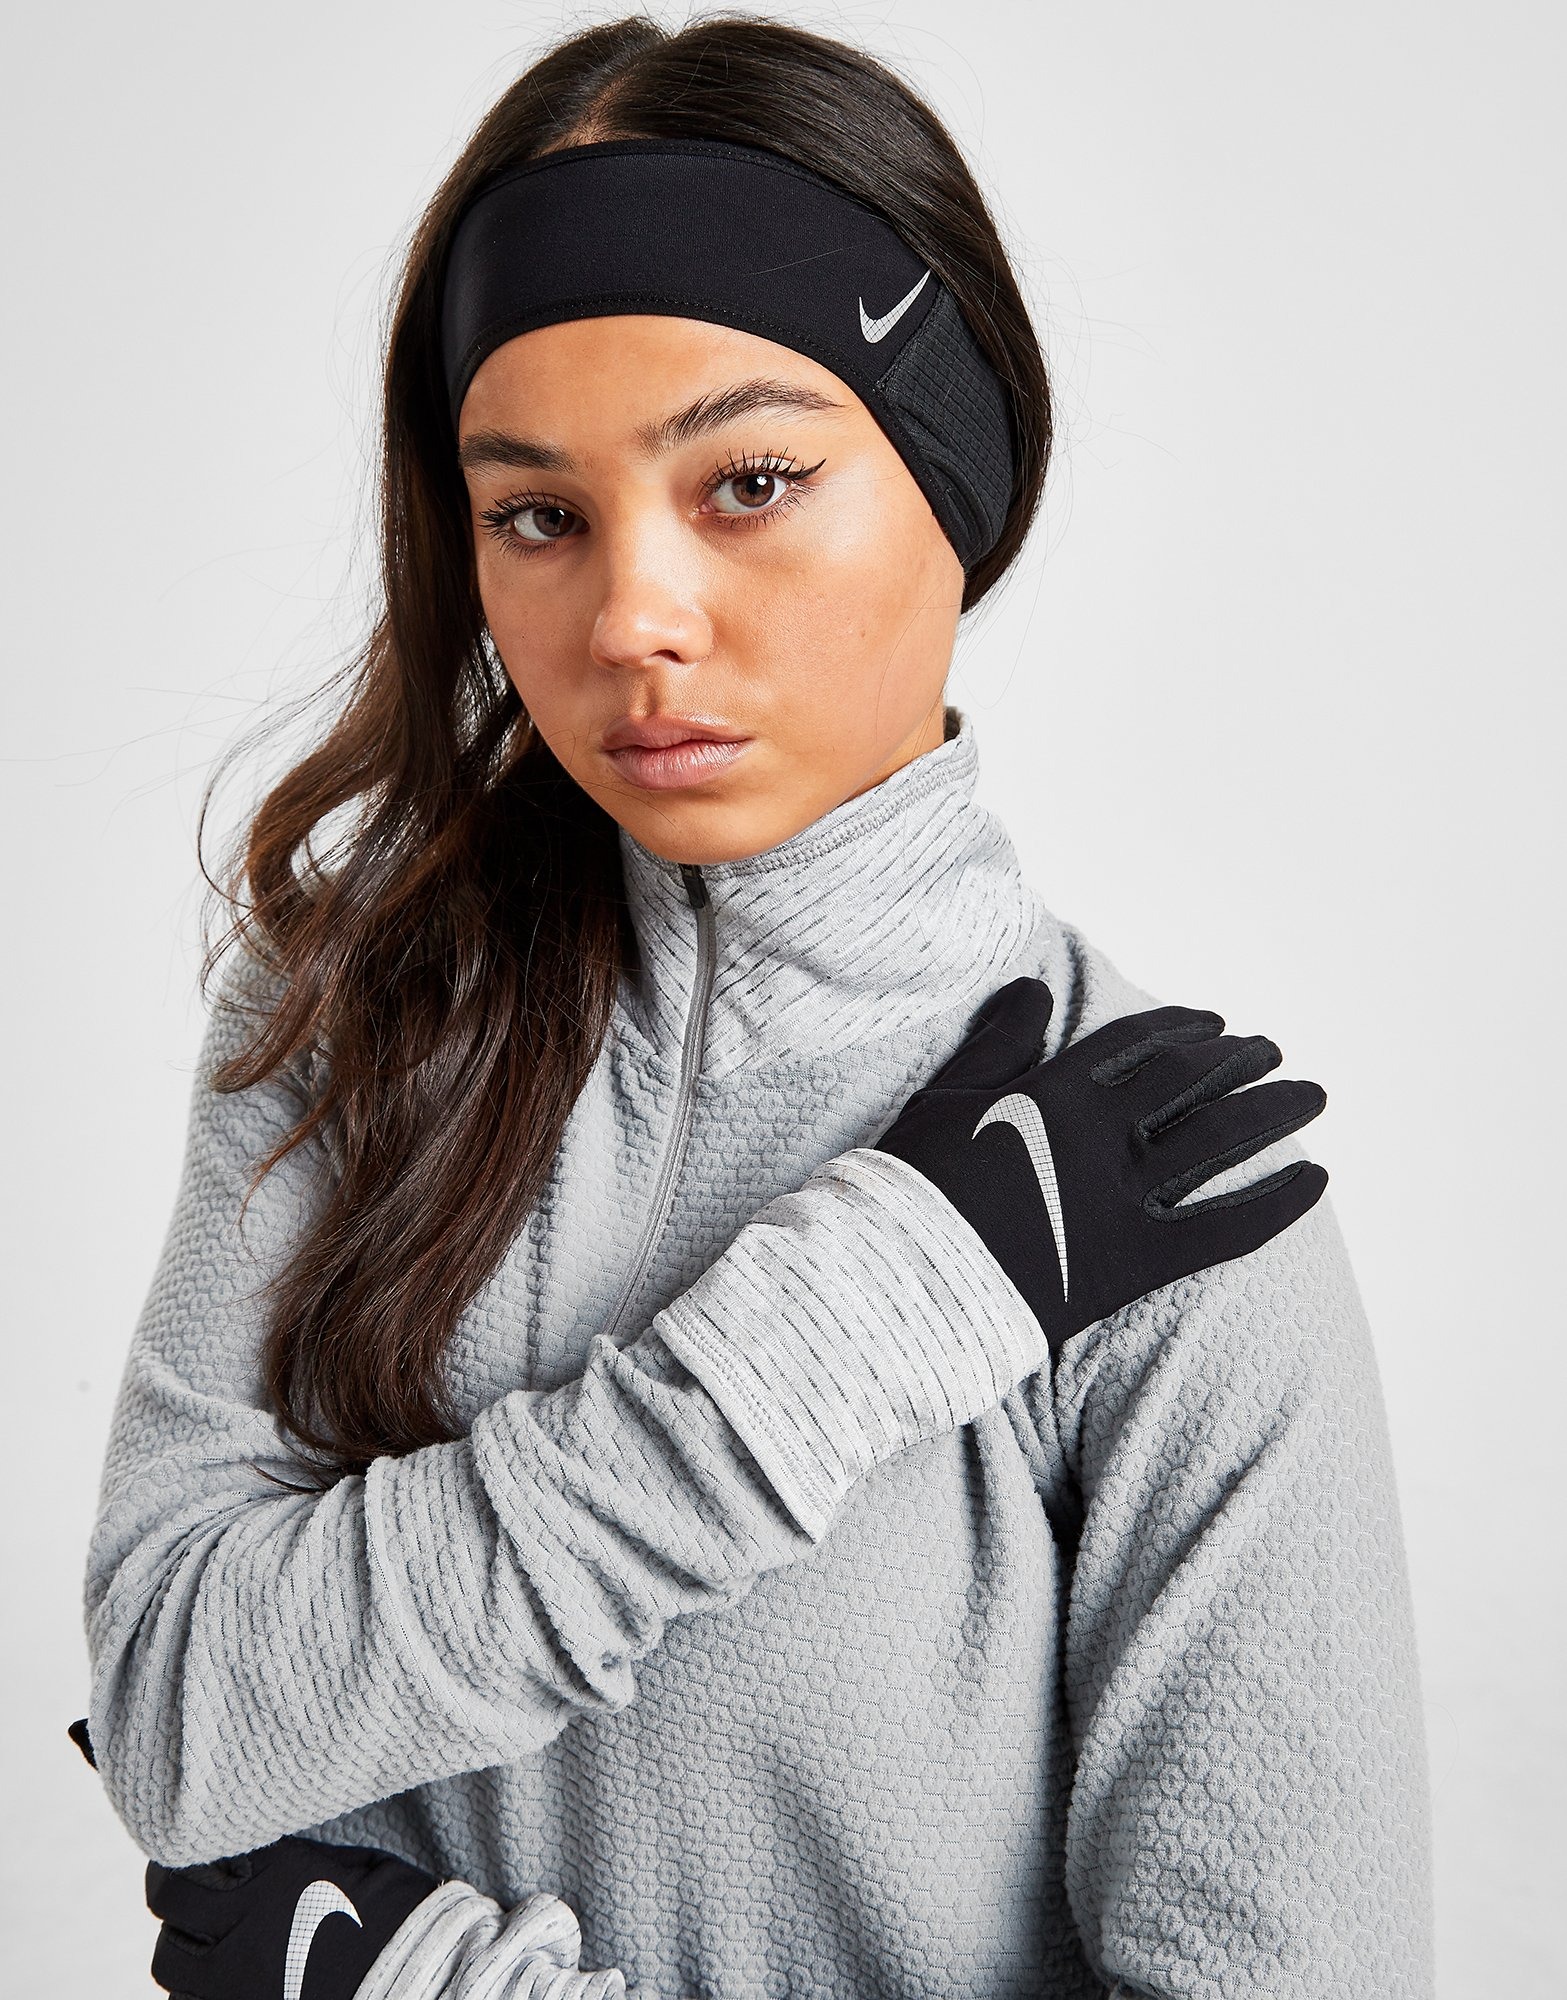 Nike Swoosh Headband ($14) ❤ liked on Polyvore featuring